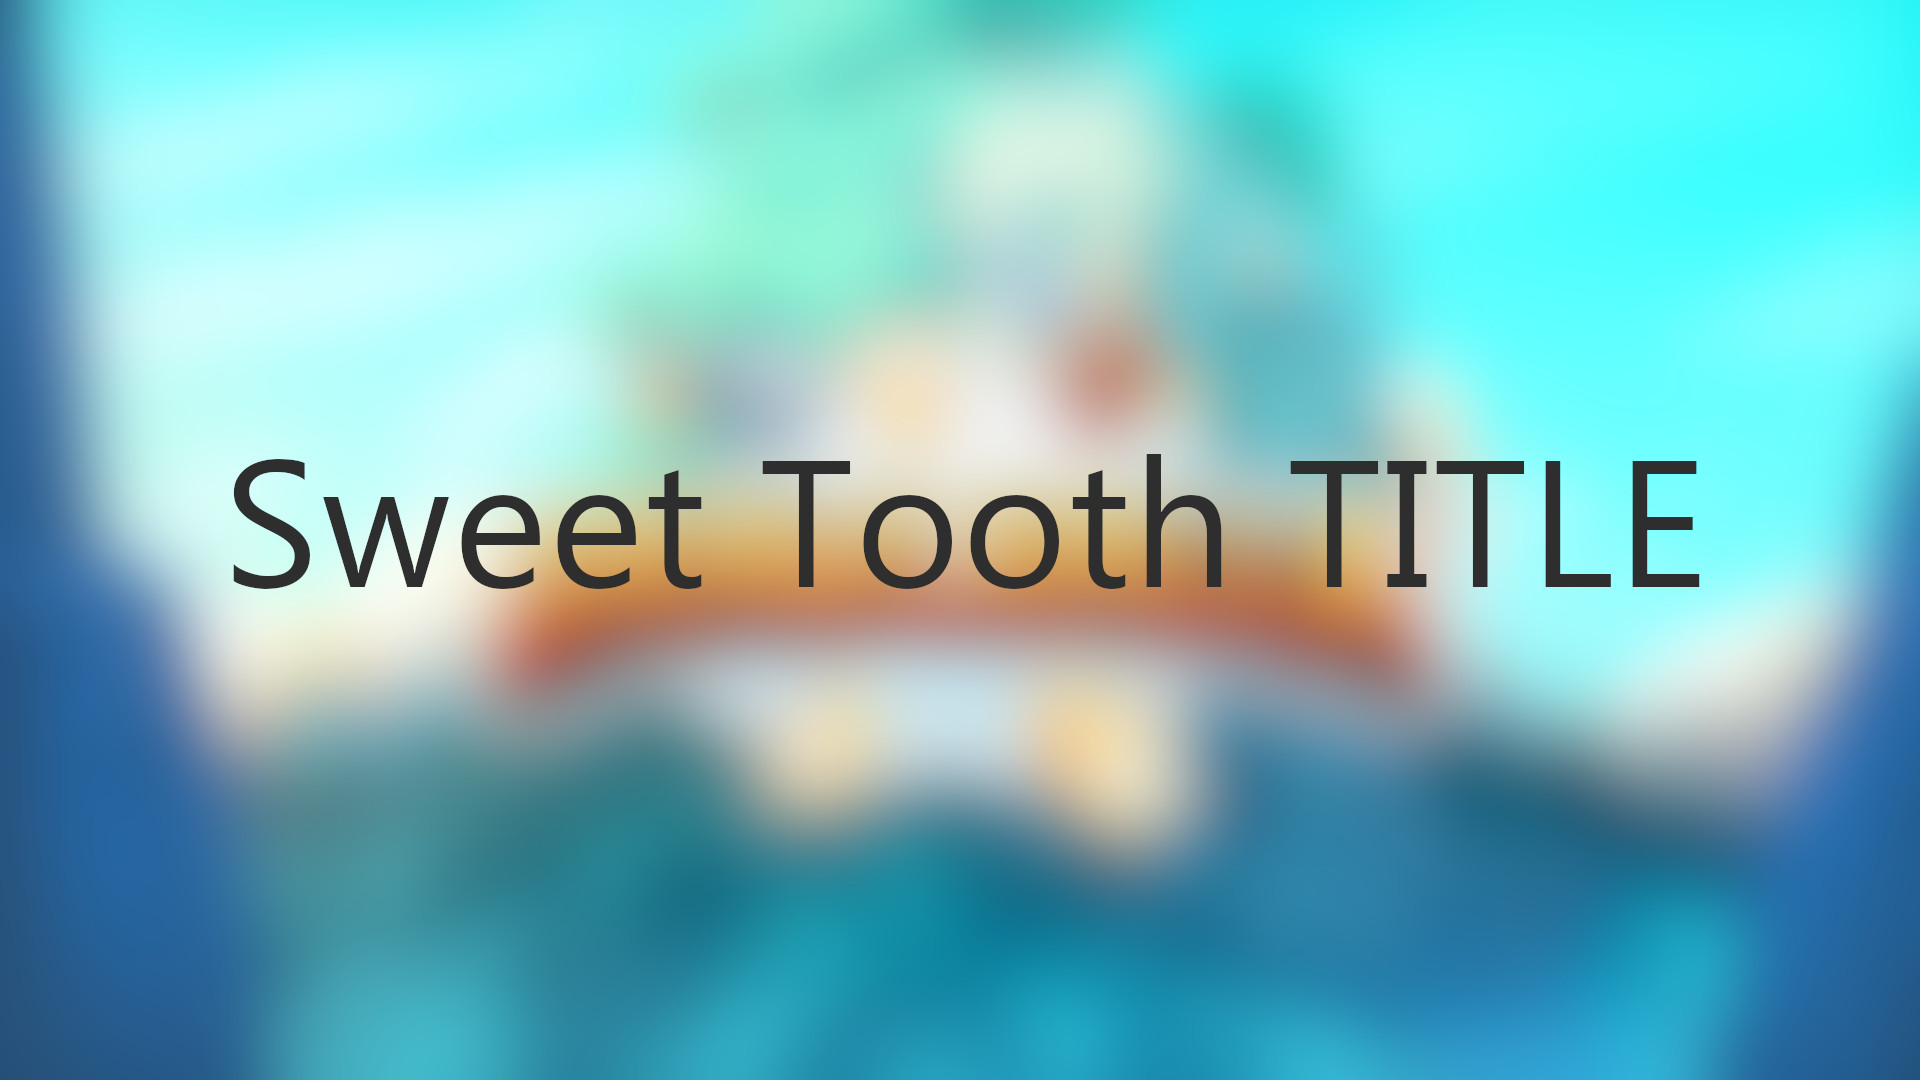 Brawlhalla - Sweet Tooth Title DLC CD Key 1.12 usd